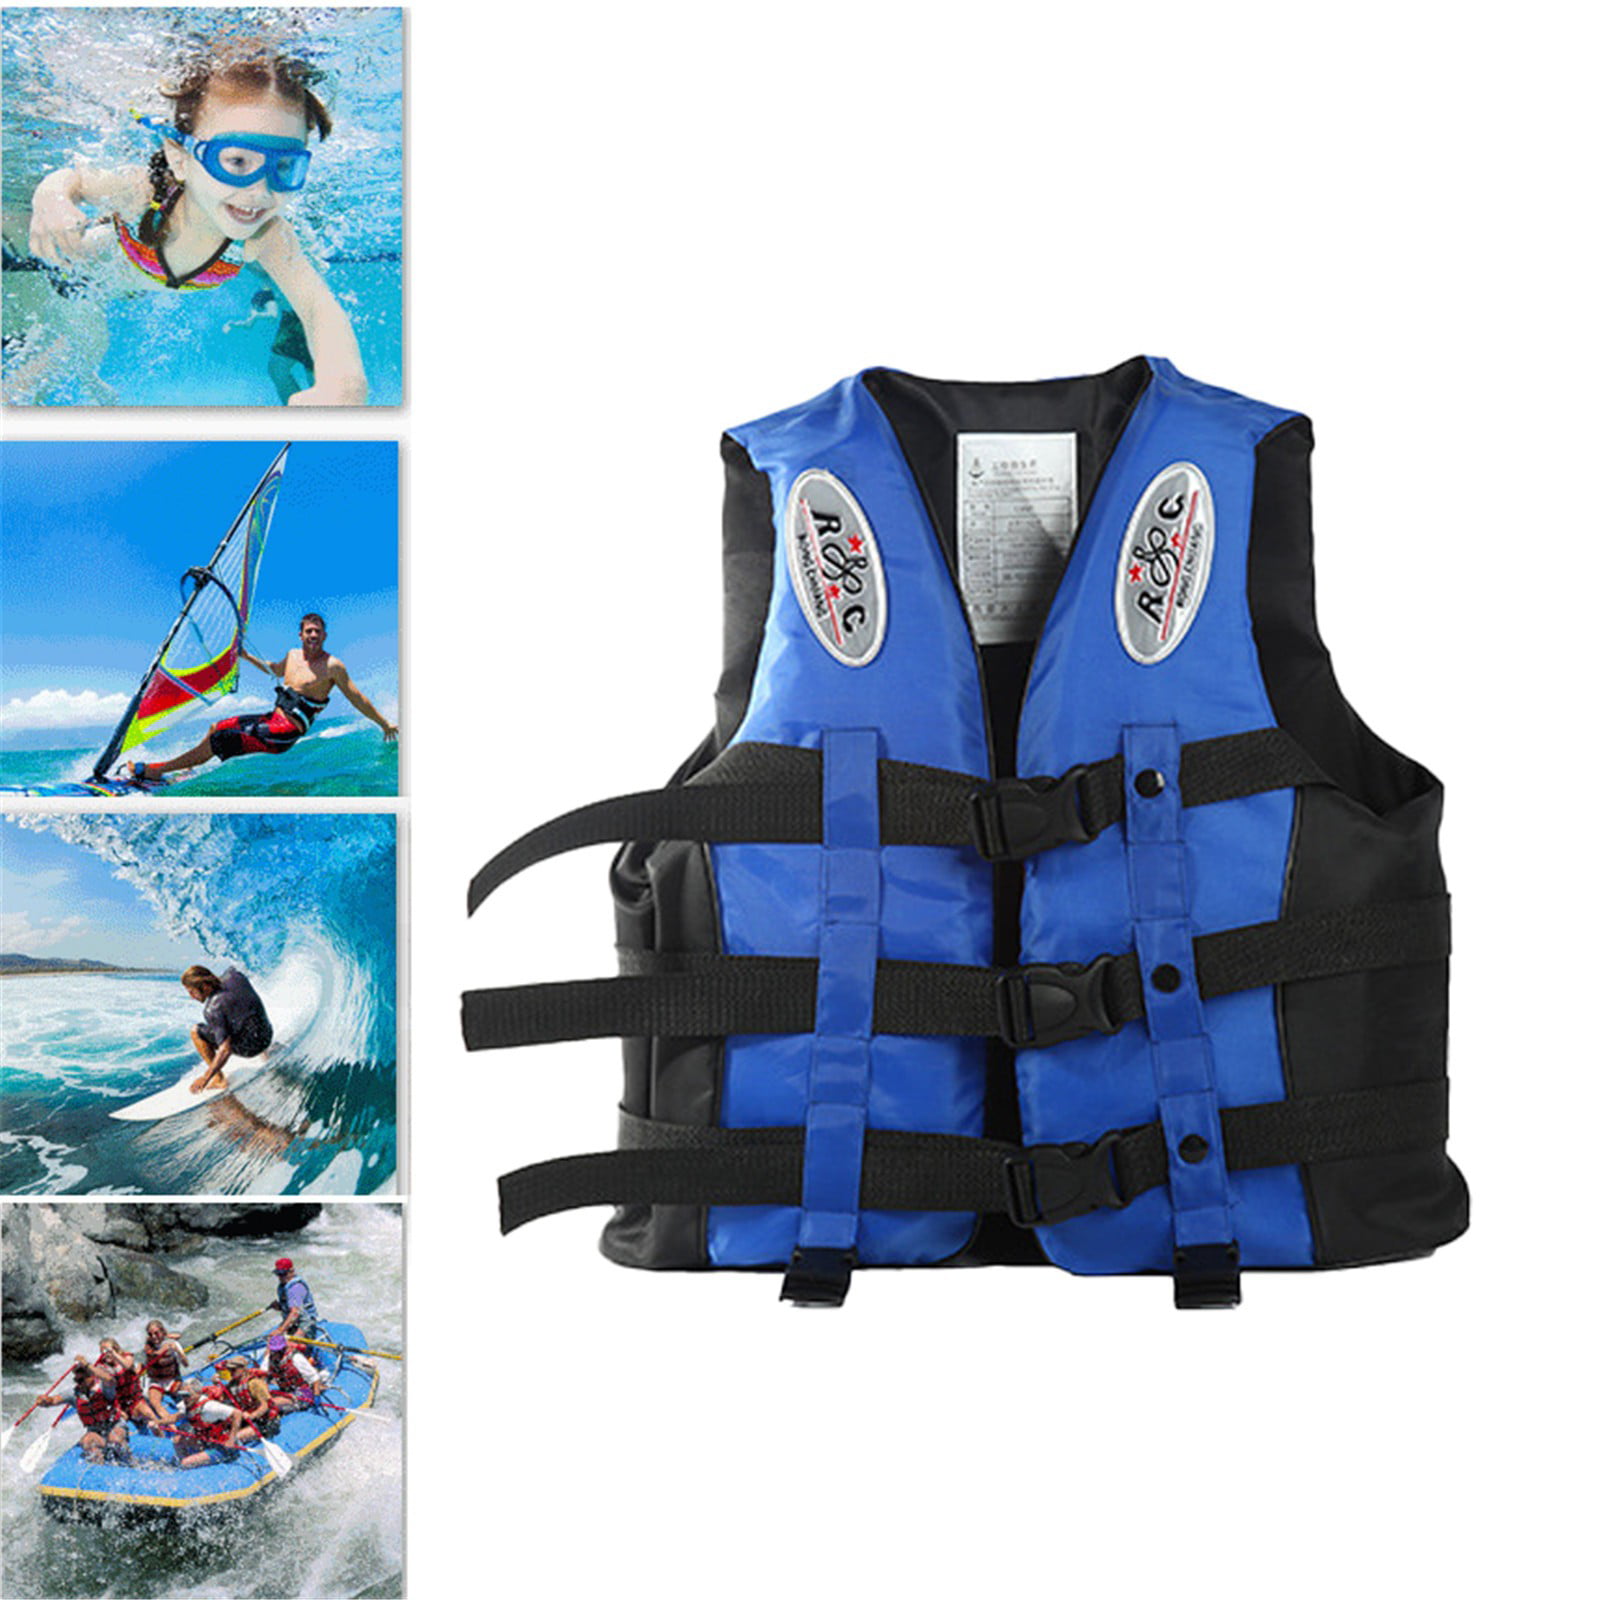 Adult Child Life Jacket Kayak Buoyancy Aid Vest Sailing Fishing Swimming S-3XL 